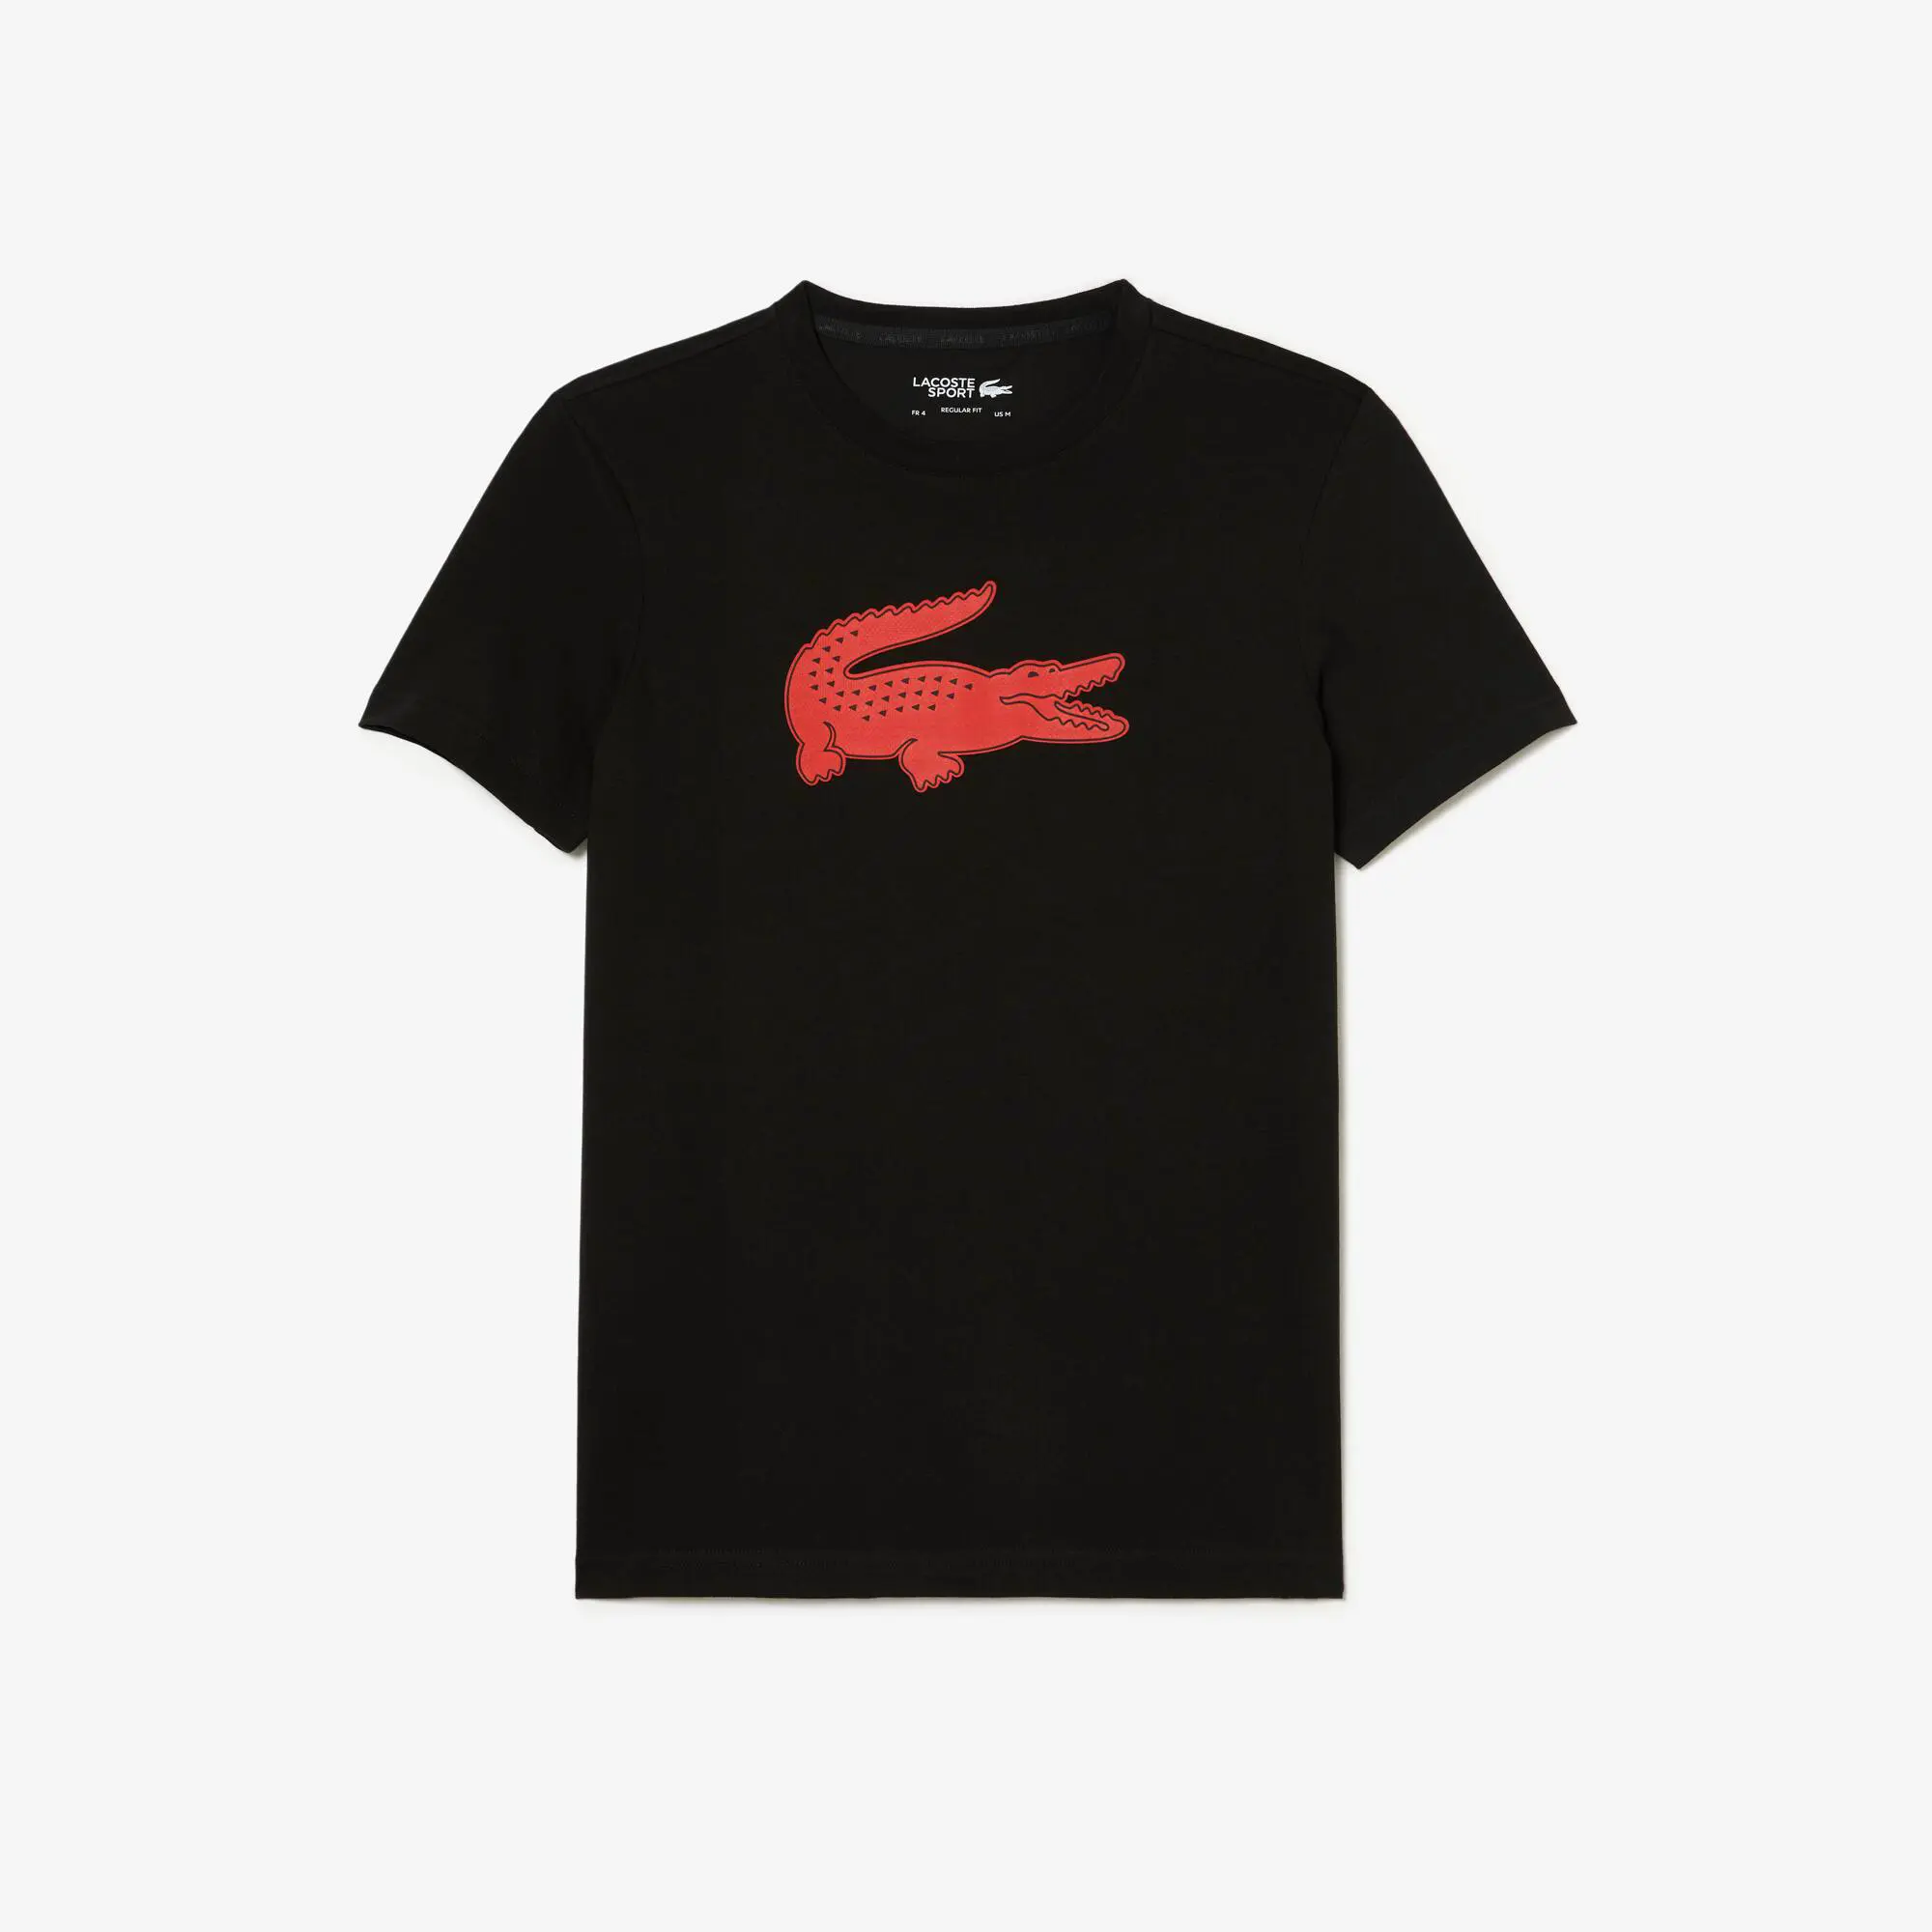 Lacoste Men's SPORT 3D Print Croc Jersey T-Shirt. 2